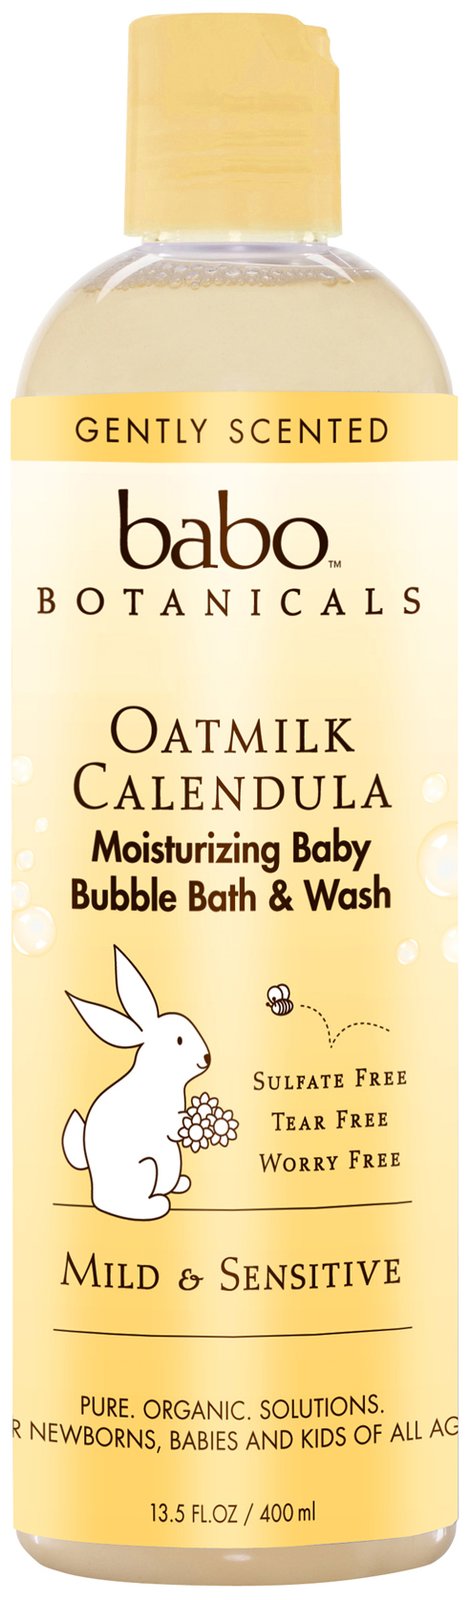 Moisturizing Baby Bubble Bath And Wash Oatmilk Calendula